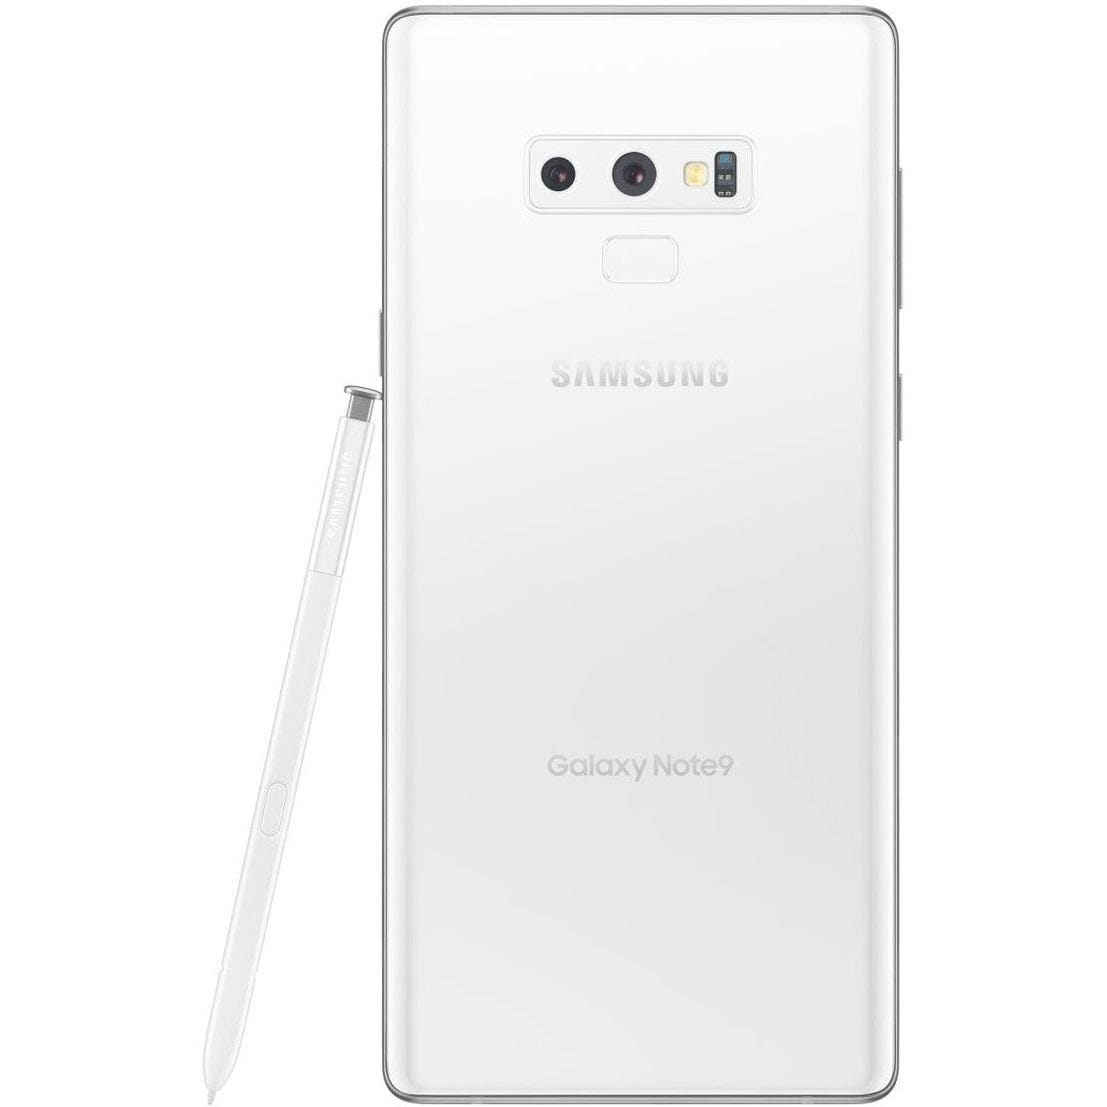 Samsung Galaxy Note 9 N9600 6GB-128GB Dual SIM - White